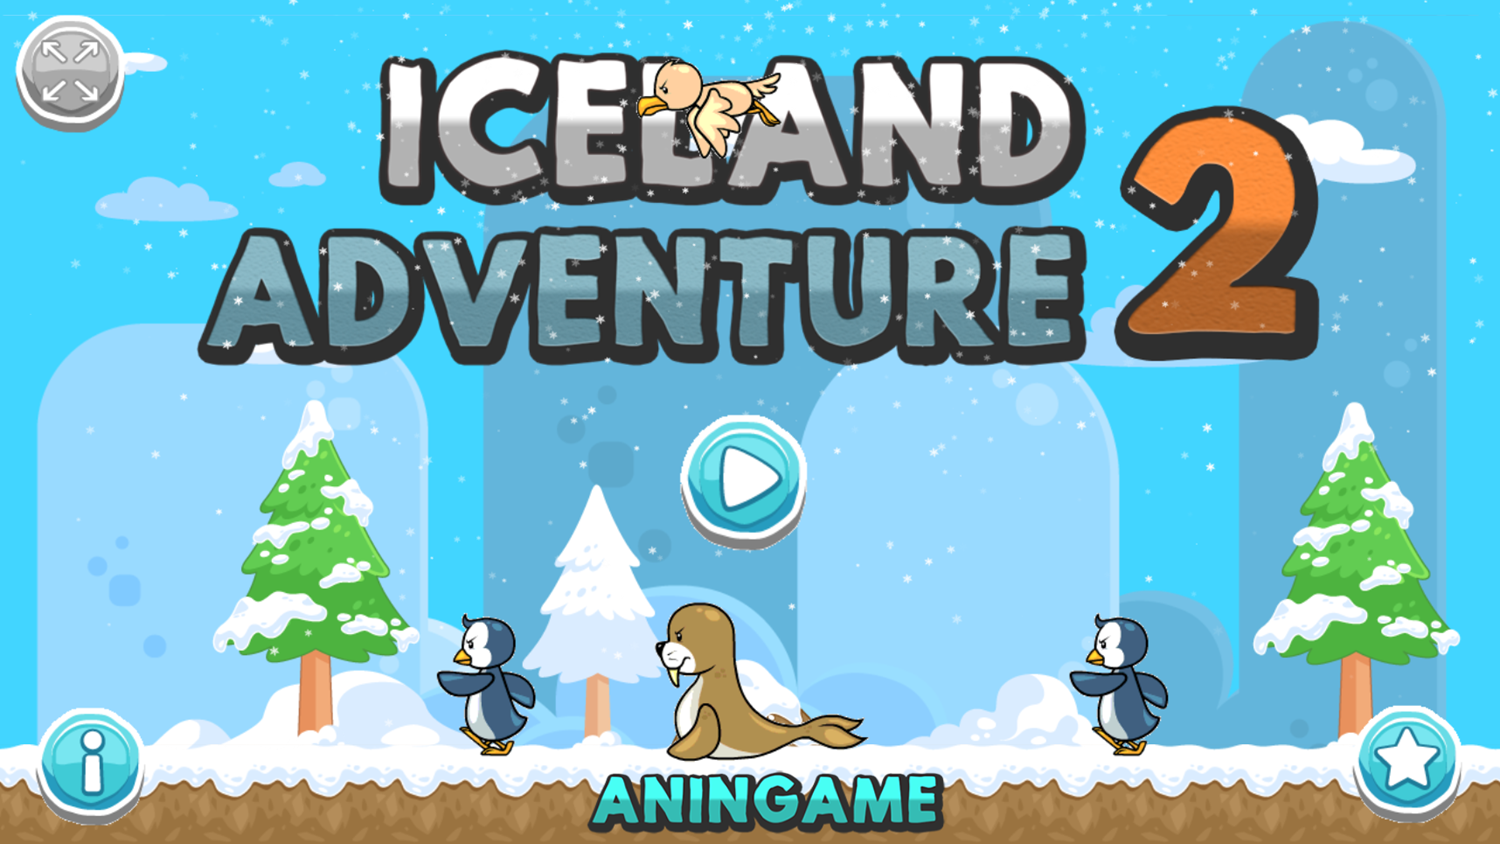 Iceland Adventure 2 Game Welcome Screen Screenshot.